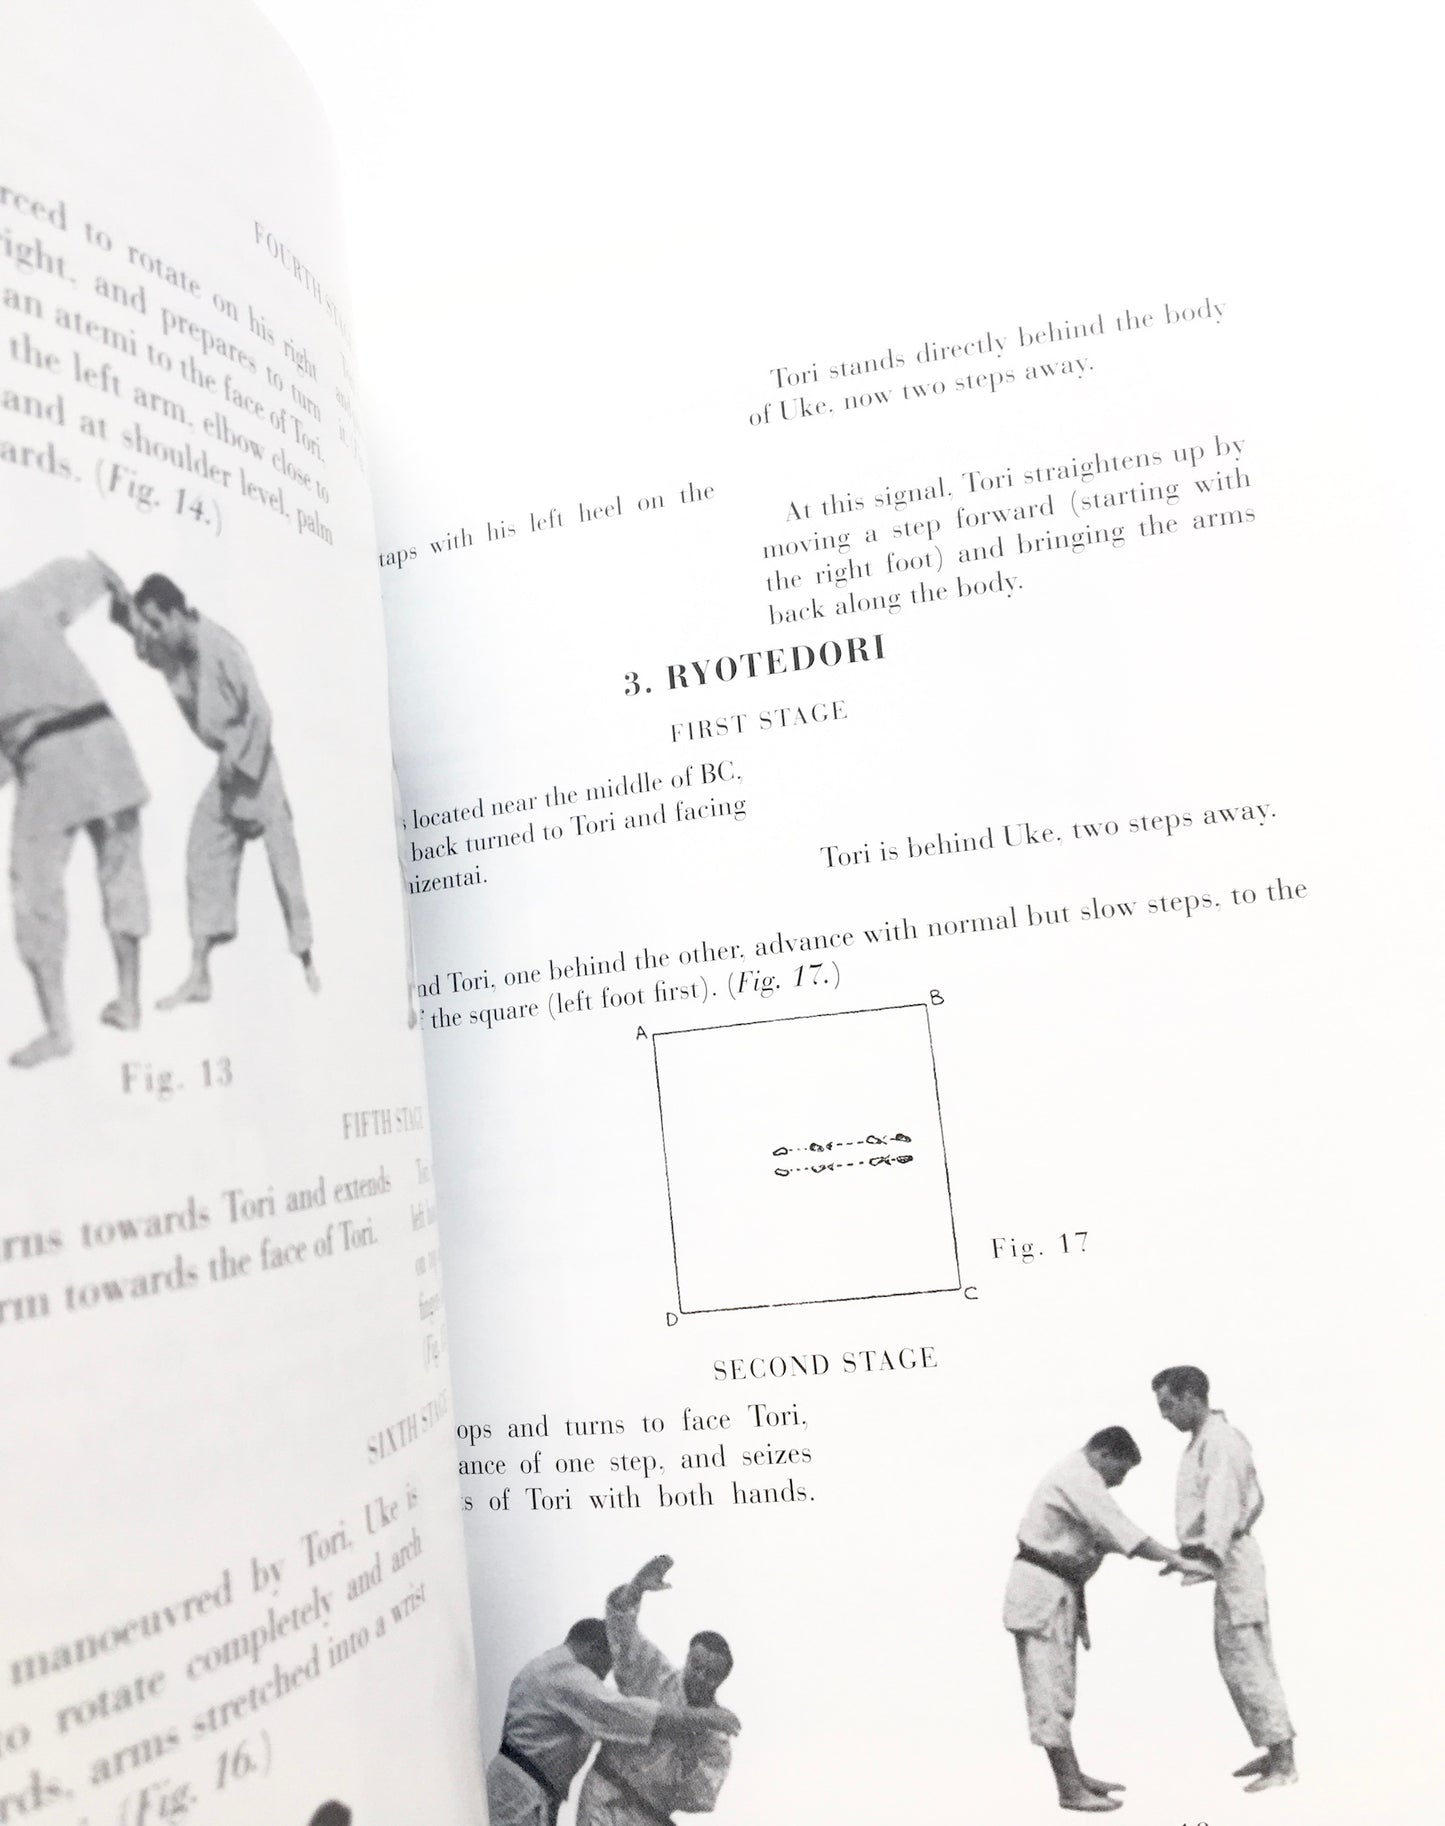 Yves Klein: The Foundations of Judo   1st English Editon